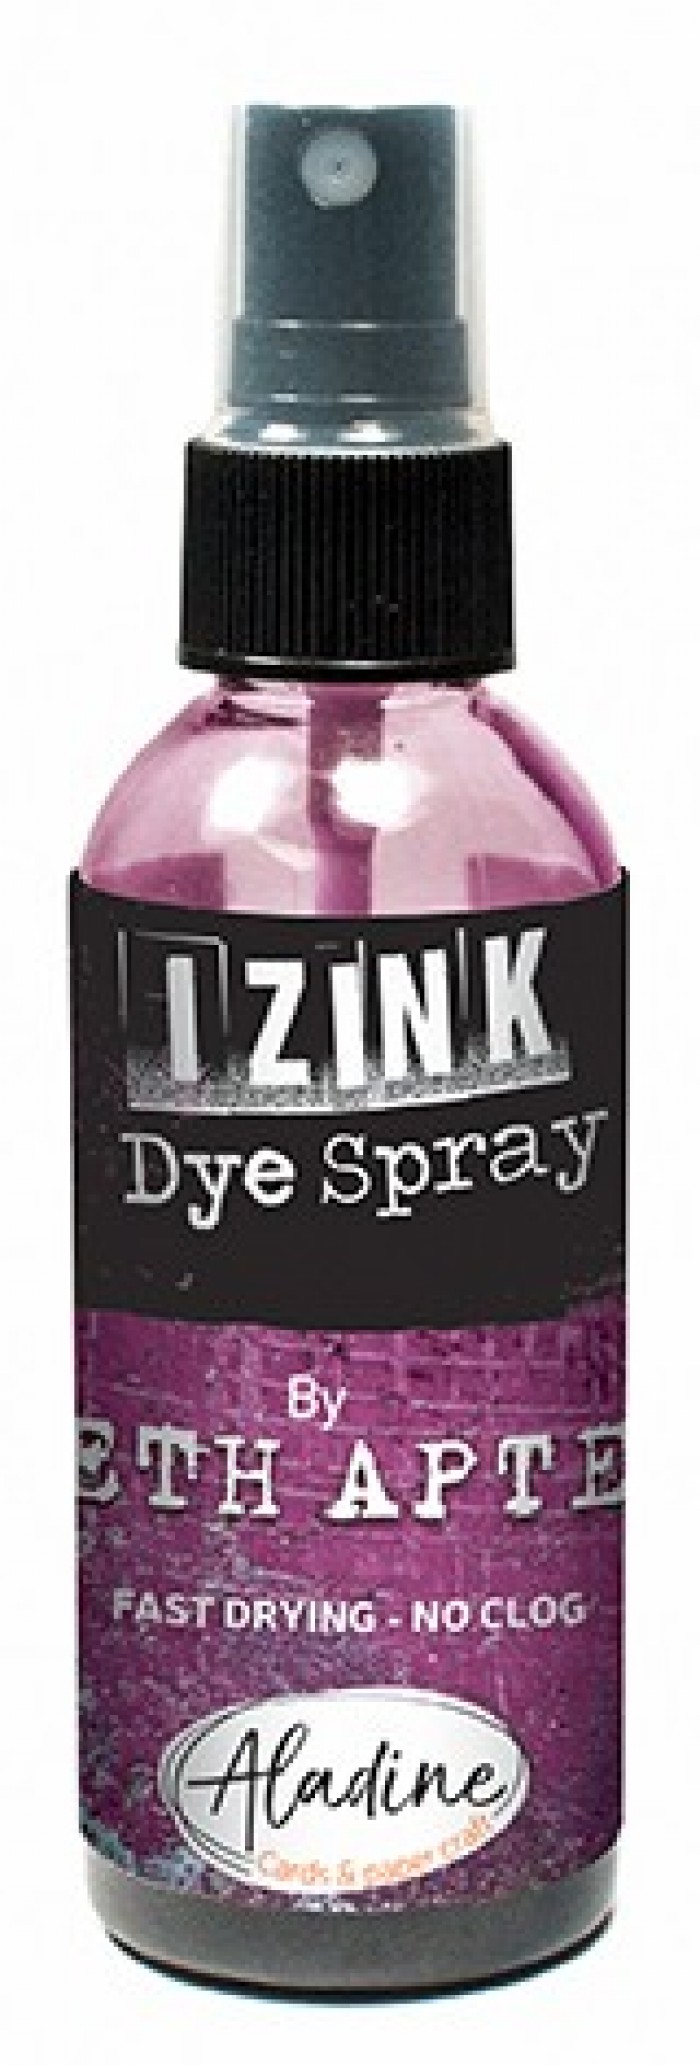 Violet - Cassis Izink Dye Spray by Seth Apter